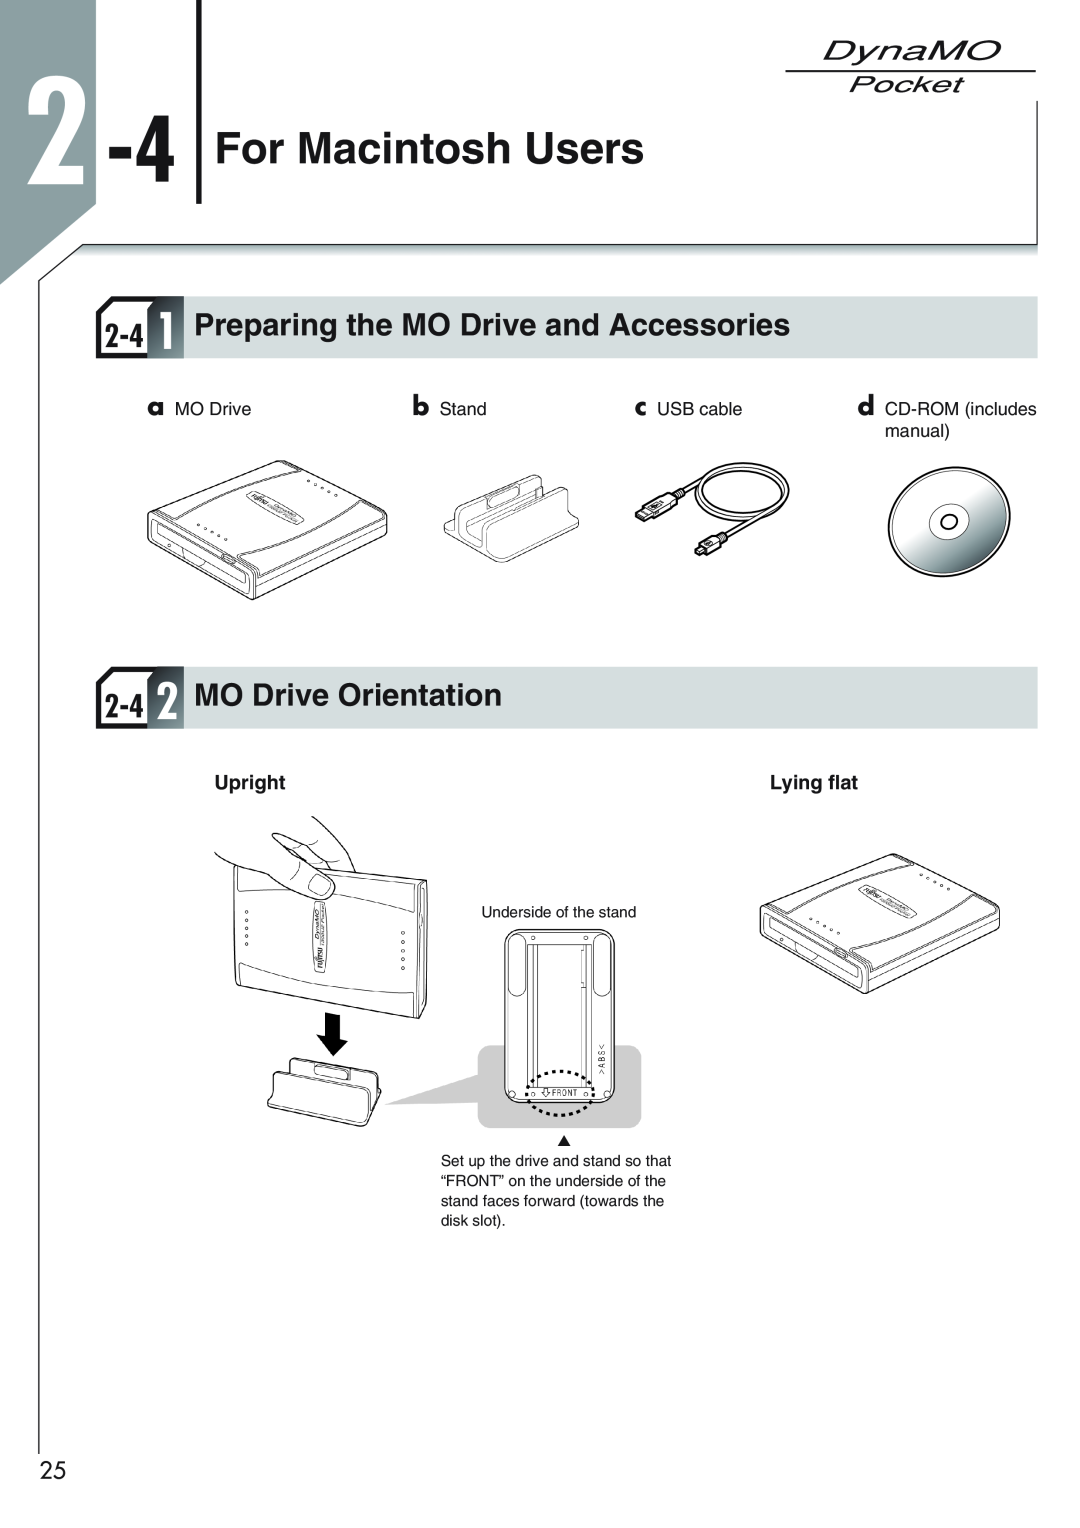 Fujitsu 1300U2 2 -4 For Macintosh Users, 2-4 1 Preparing the MO Drive and Accessories, 2-4 2 MO Drive Orientation, Upright 